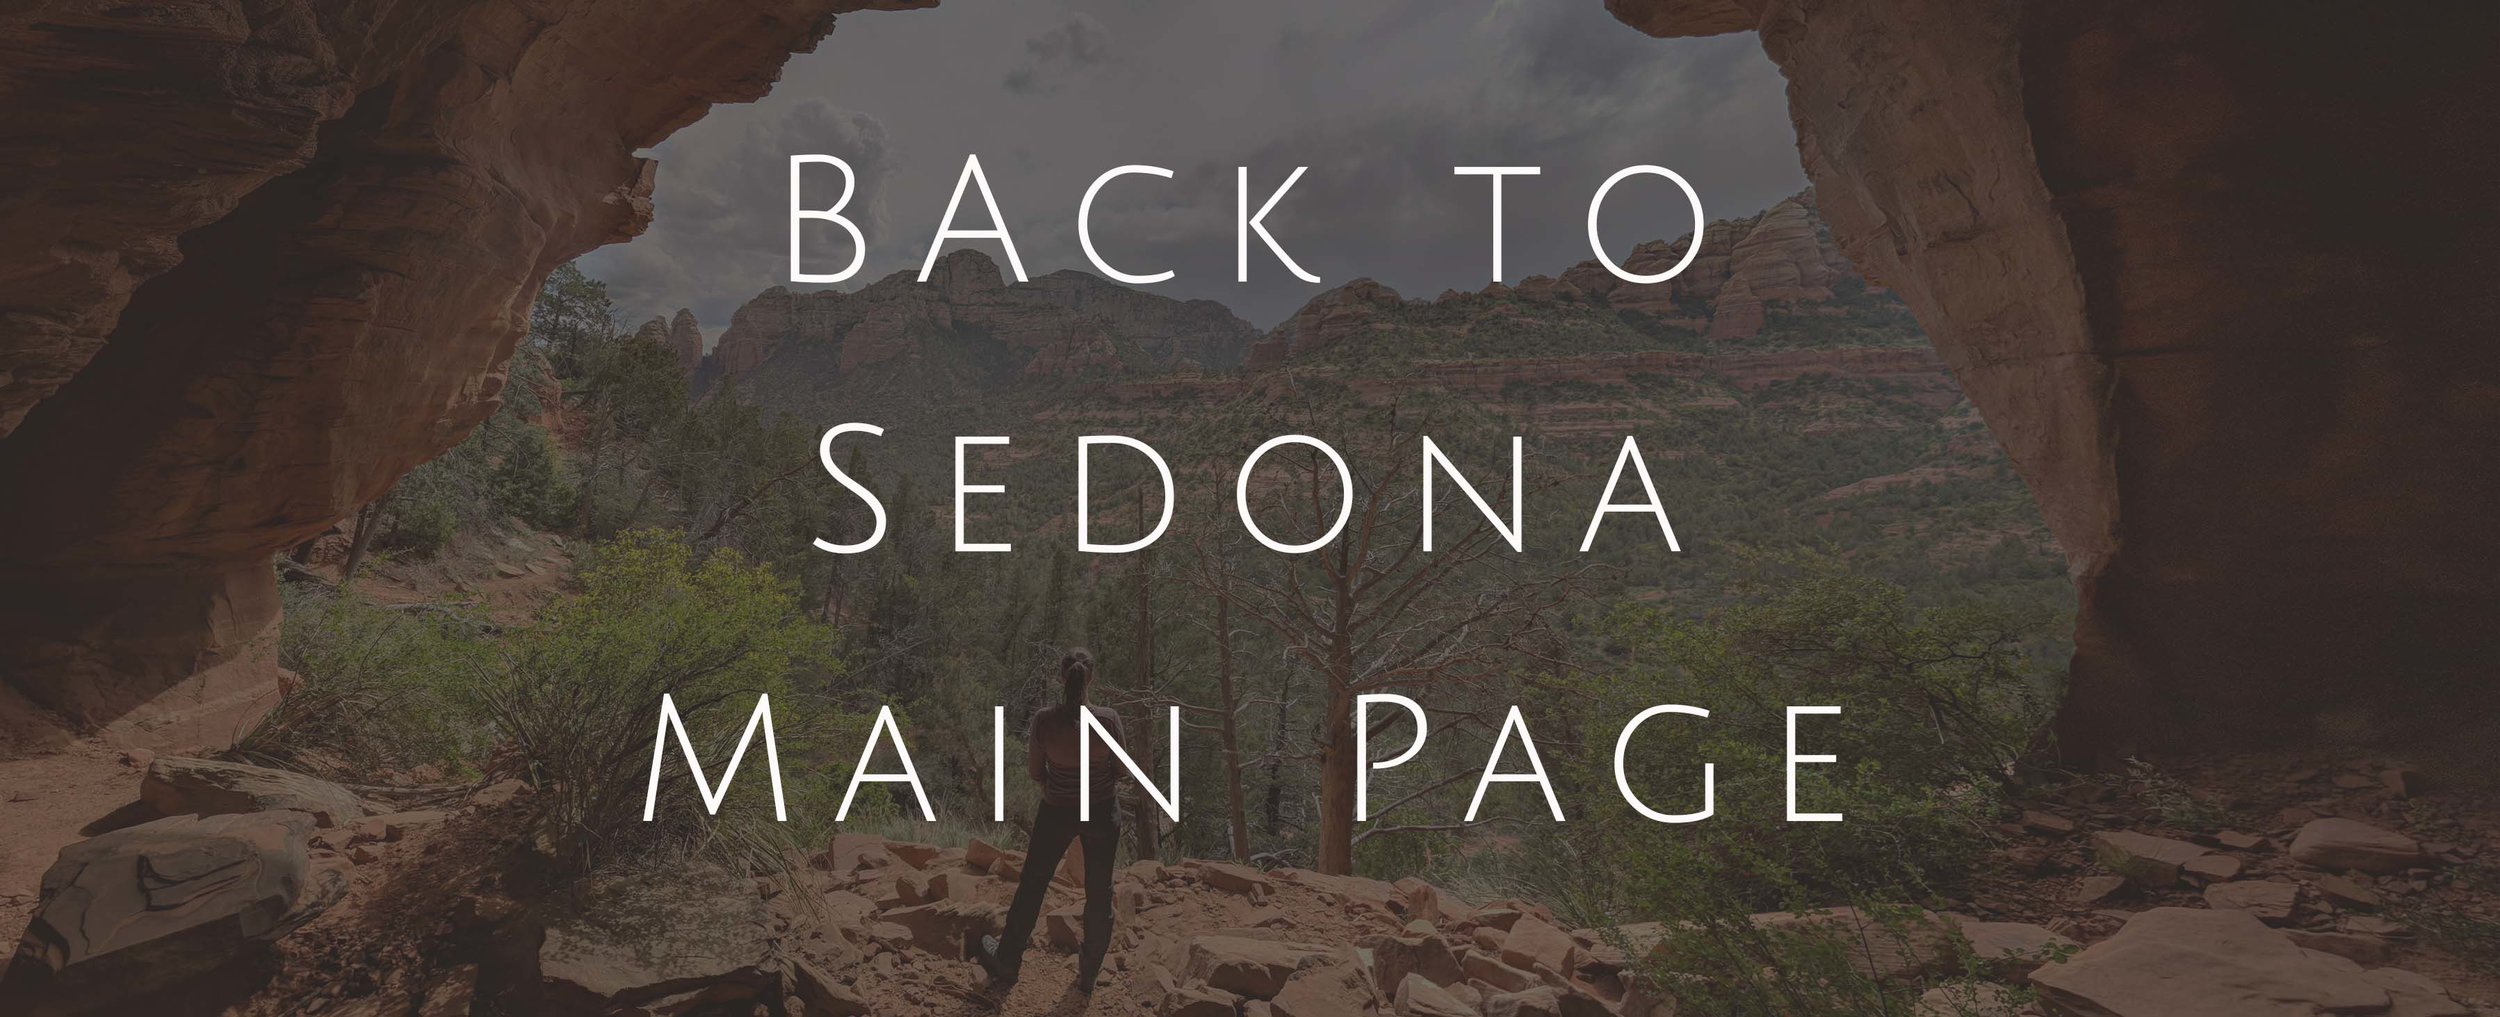 Back to Sedona Main Page2.jpg